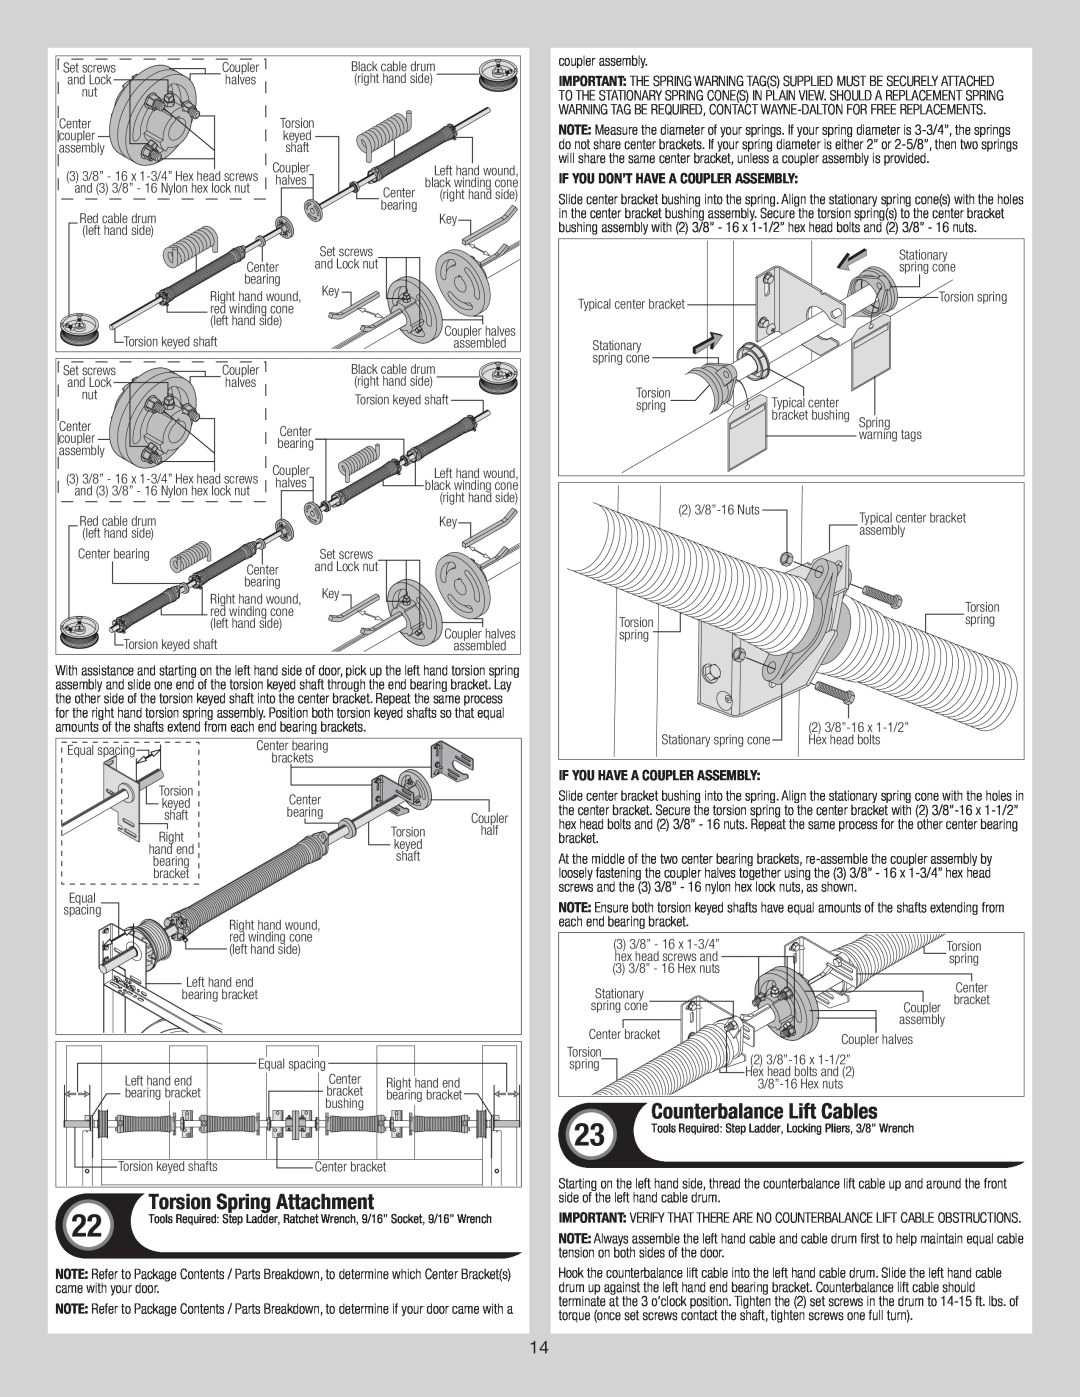 Wayne-Dalton 6600 installation instructions Torsion Spring Attachment, Counterbalance Lift Cables 